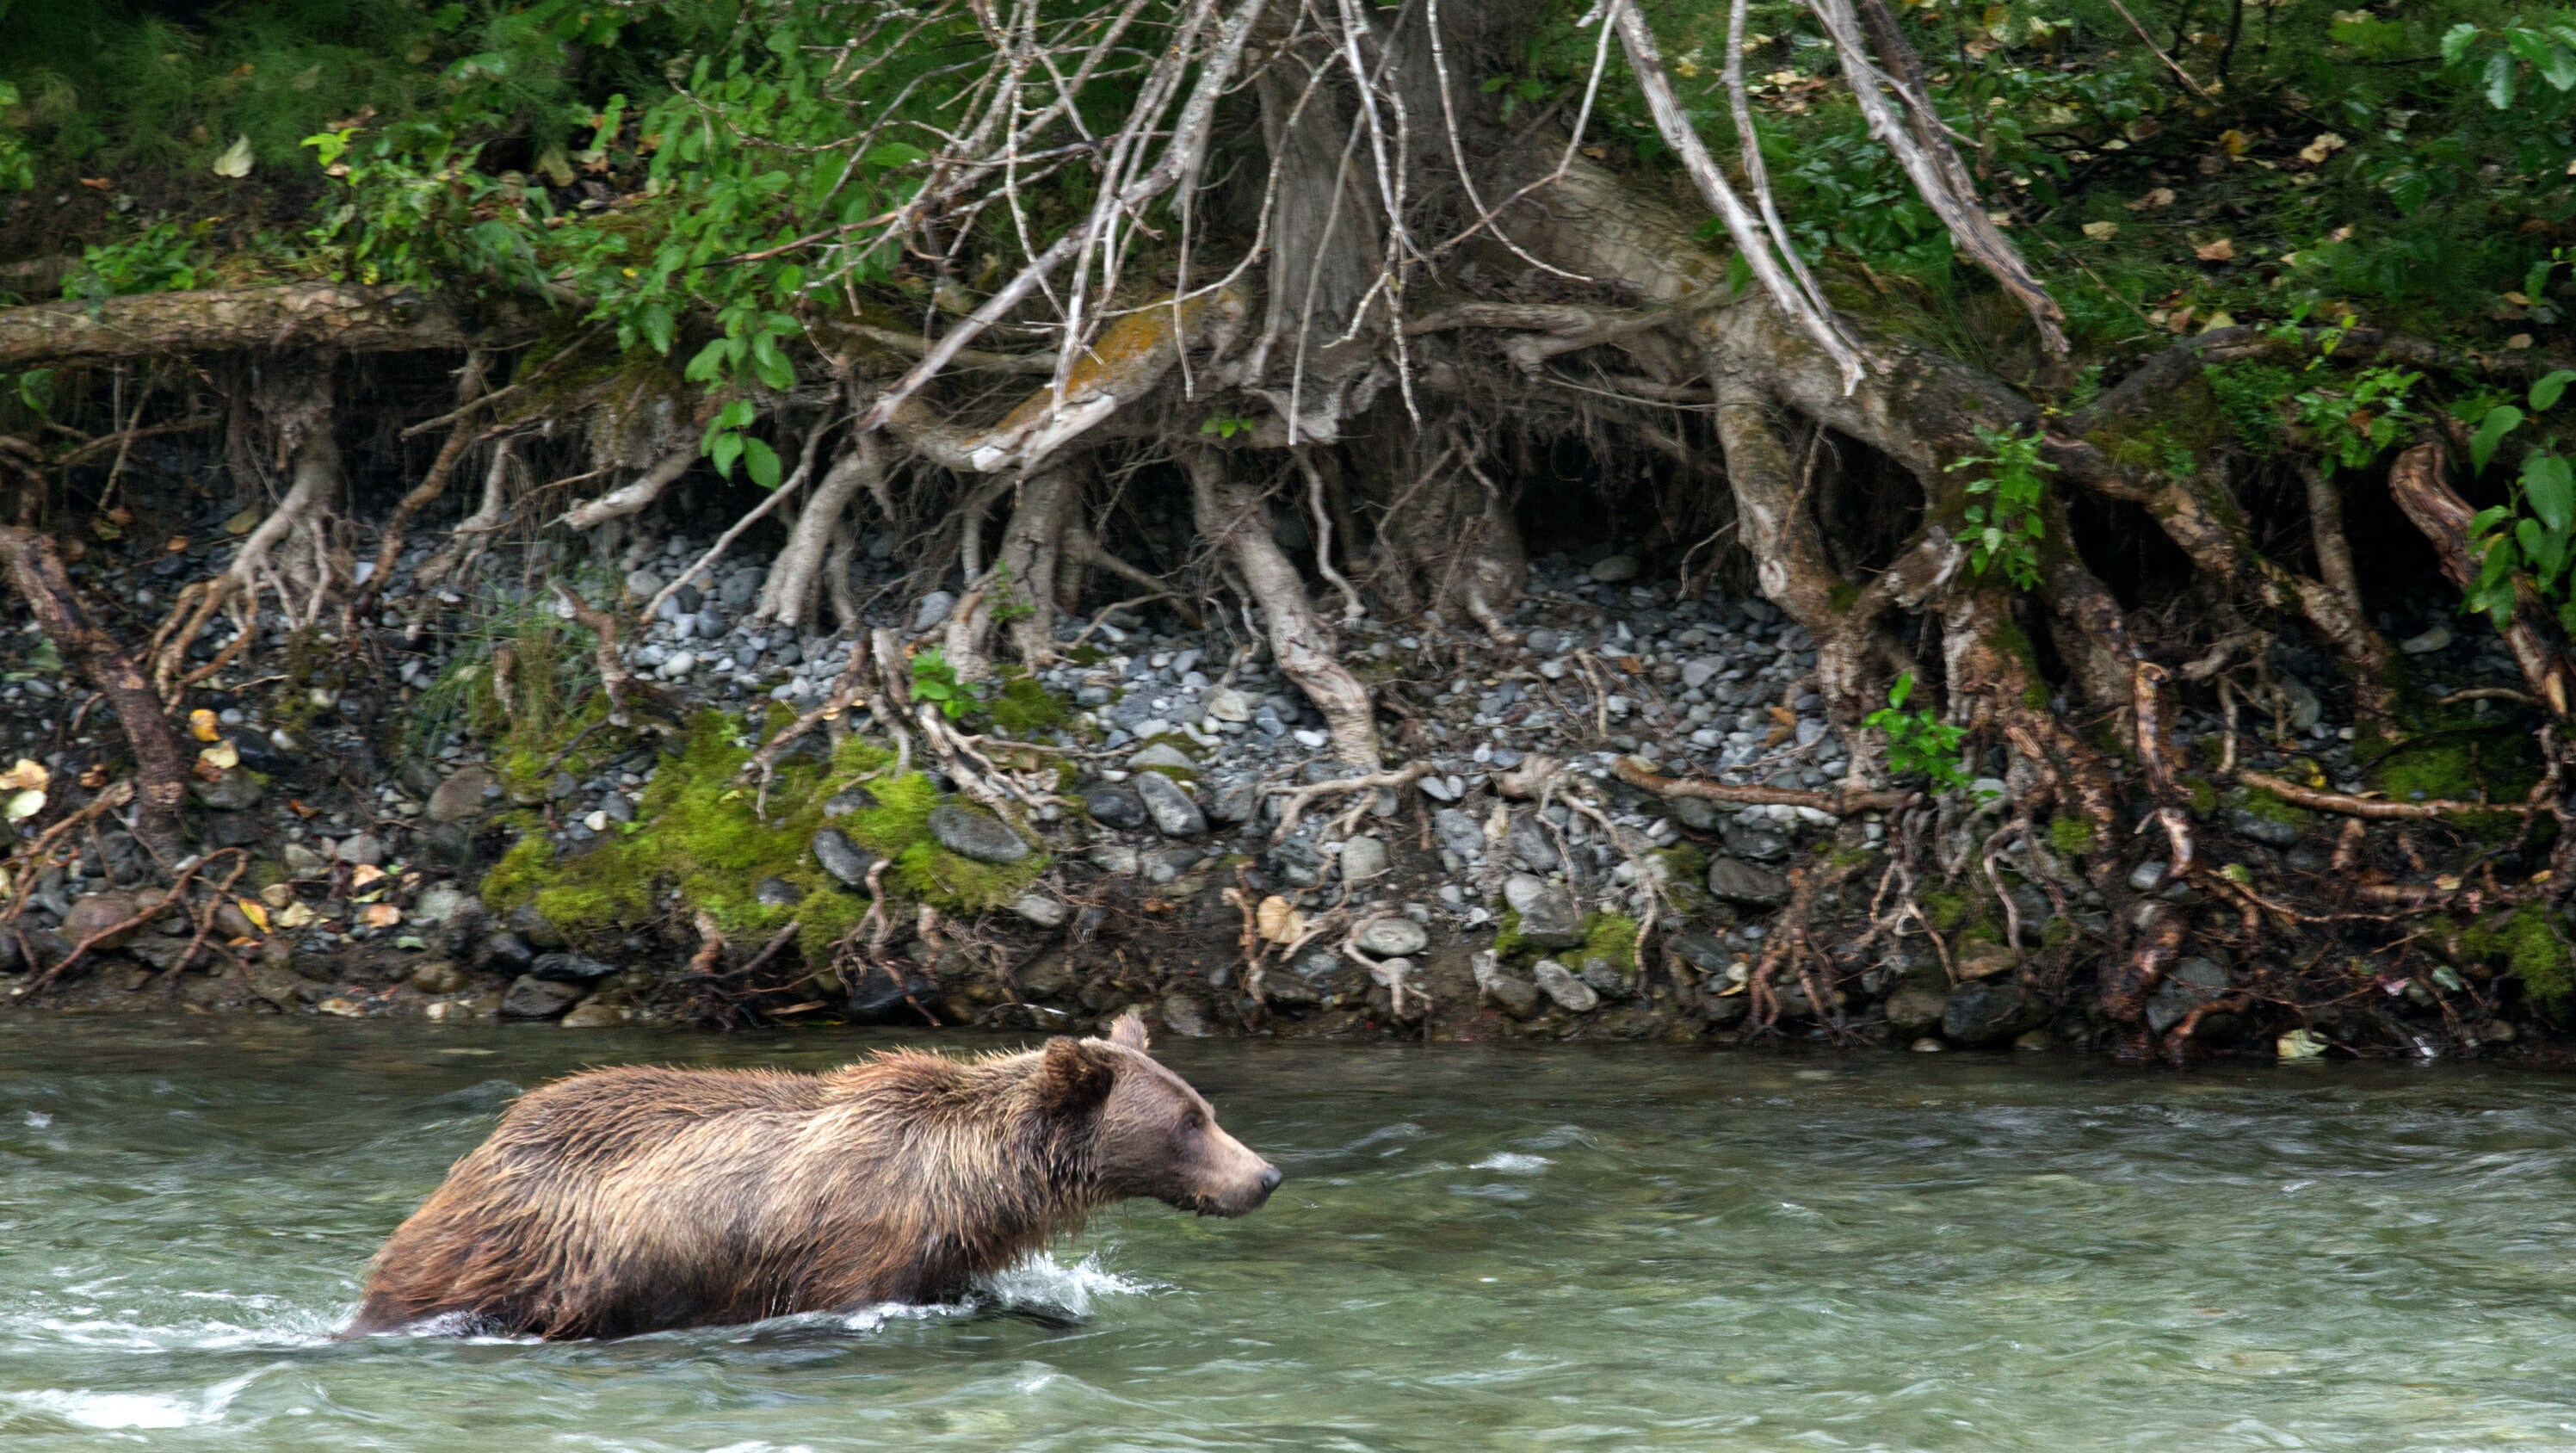 Fern hunts for salmon in the river. (National Geographic for Disney+/Samuel Ellis)